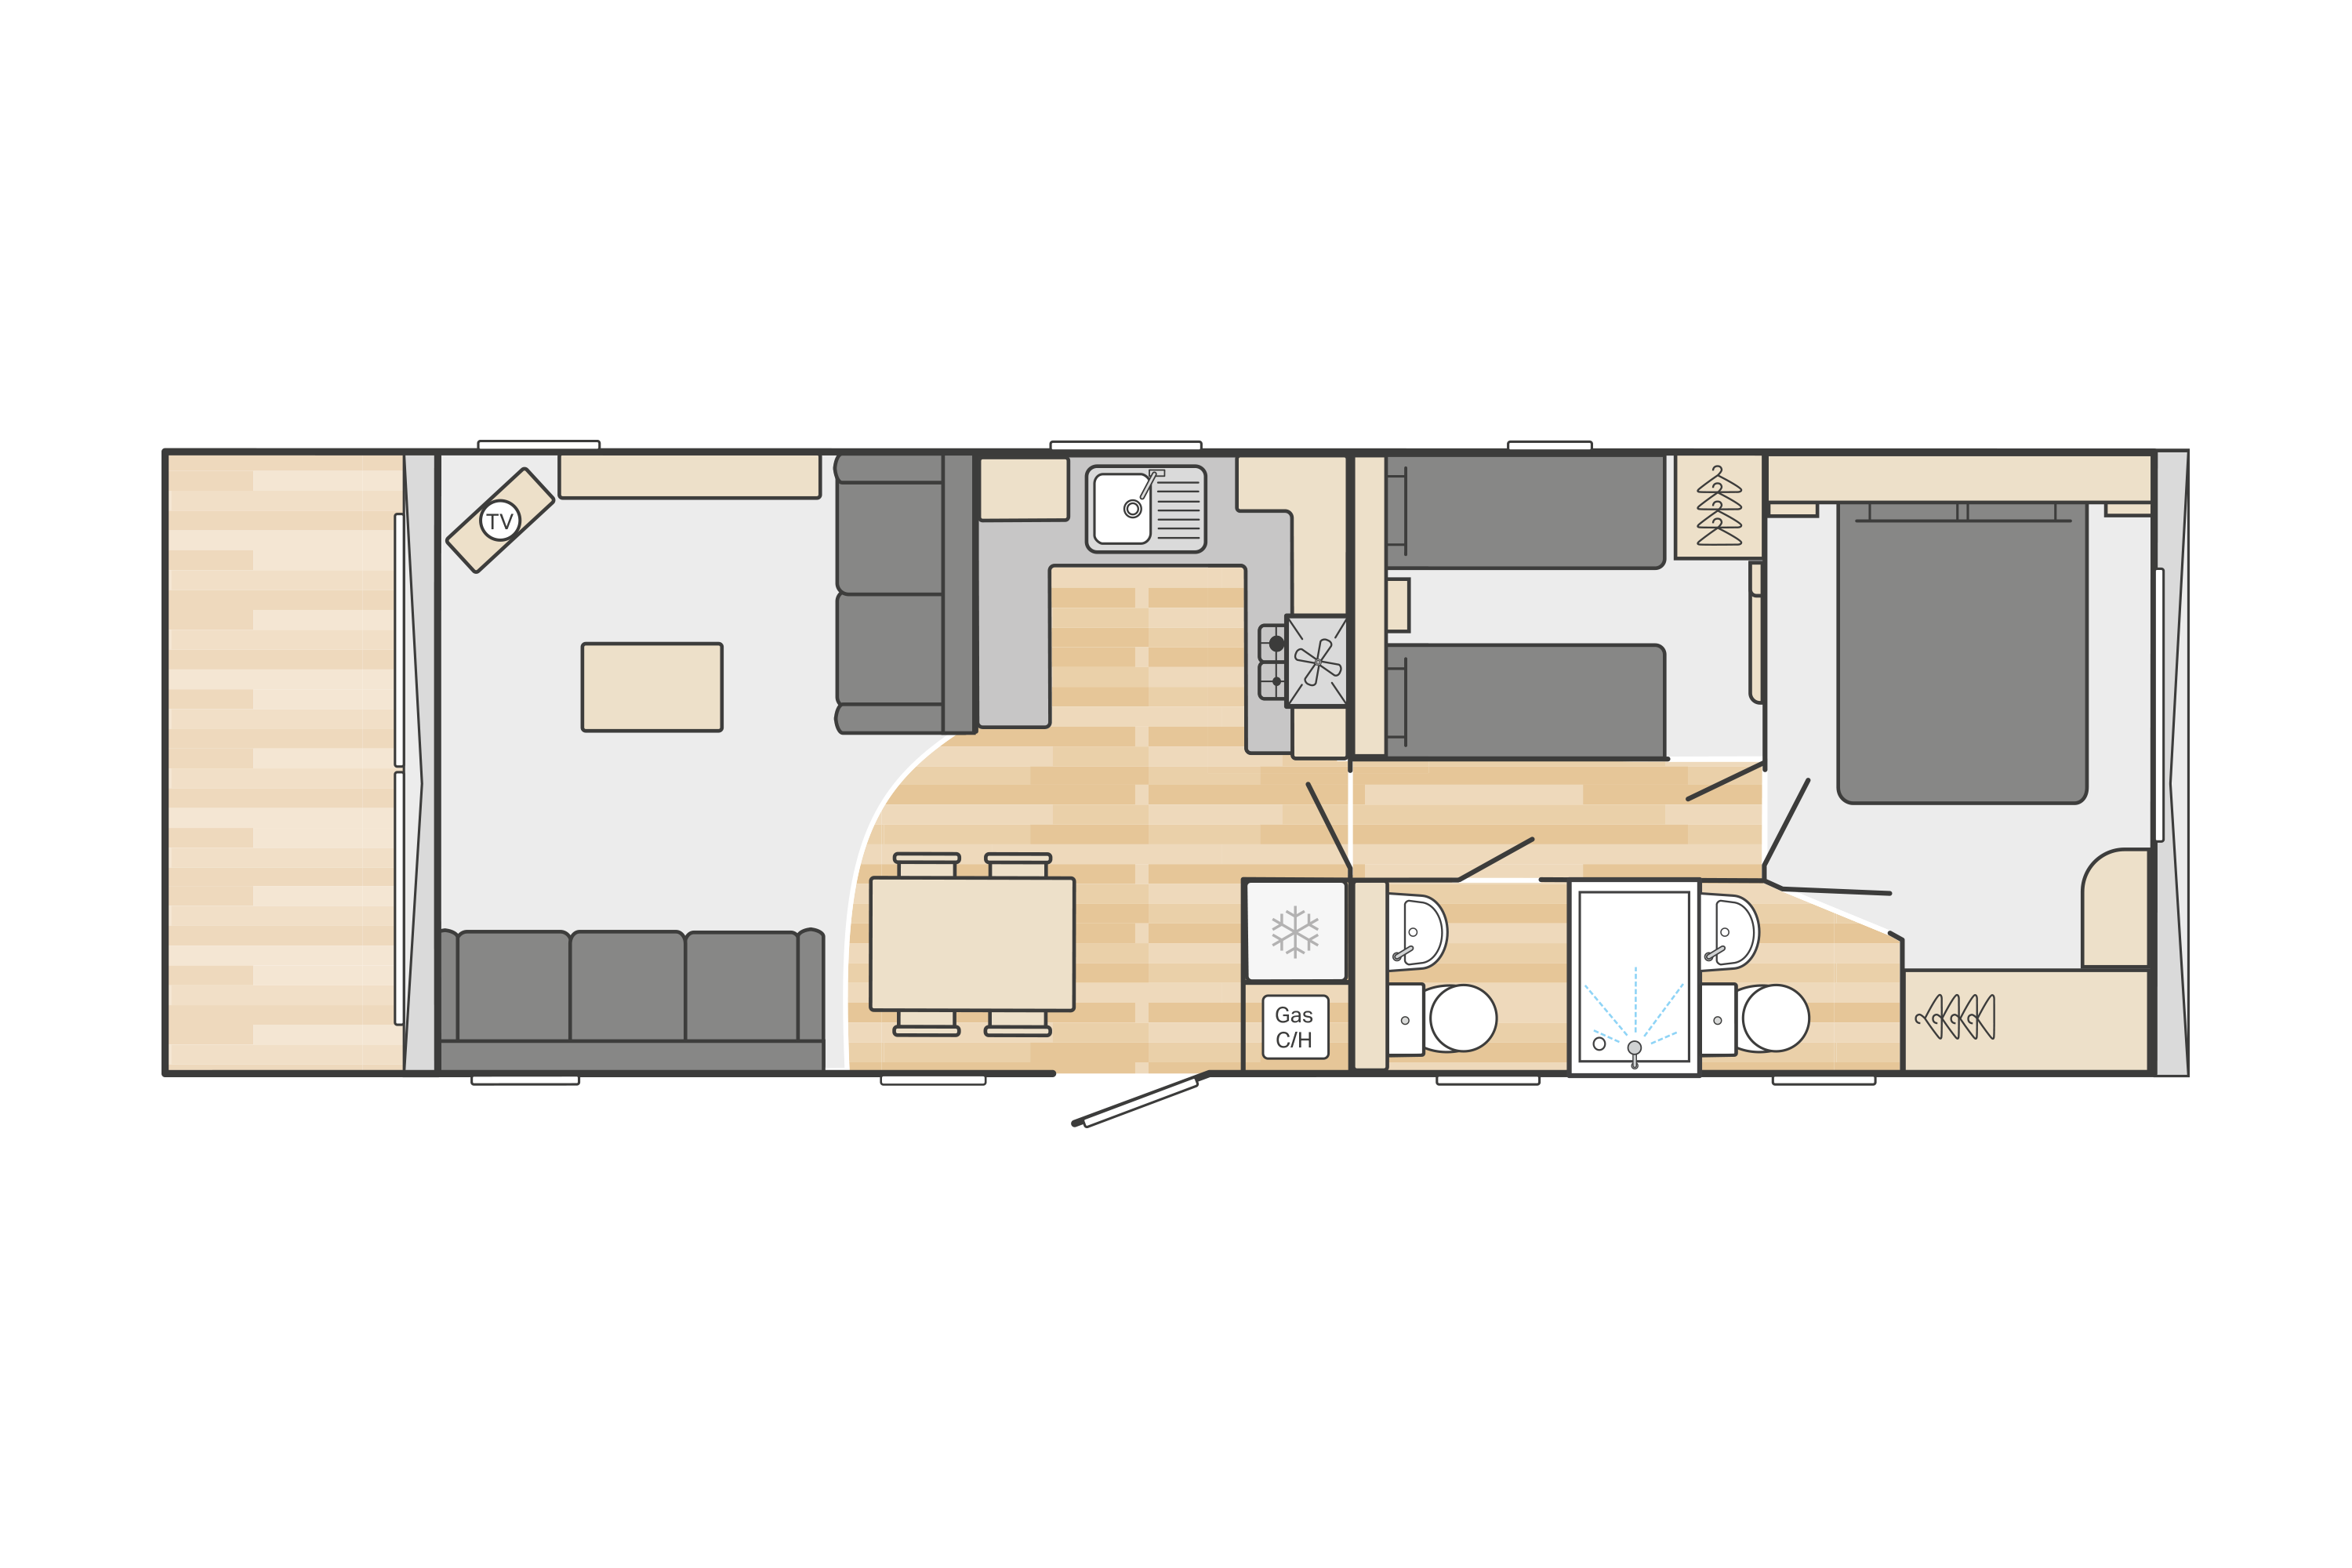 Bordeaux Escape 38' x 12' 2 Bedroom floorplan